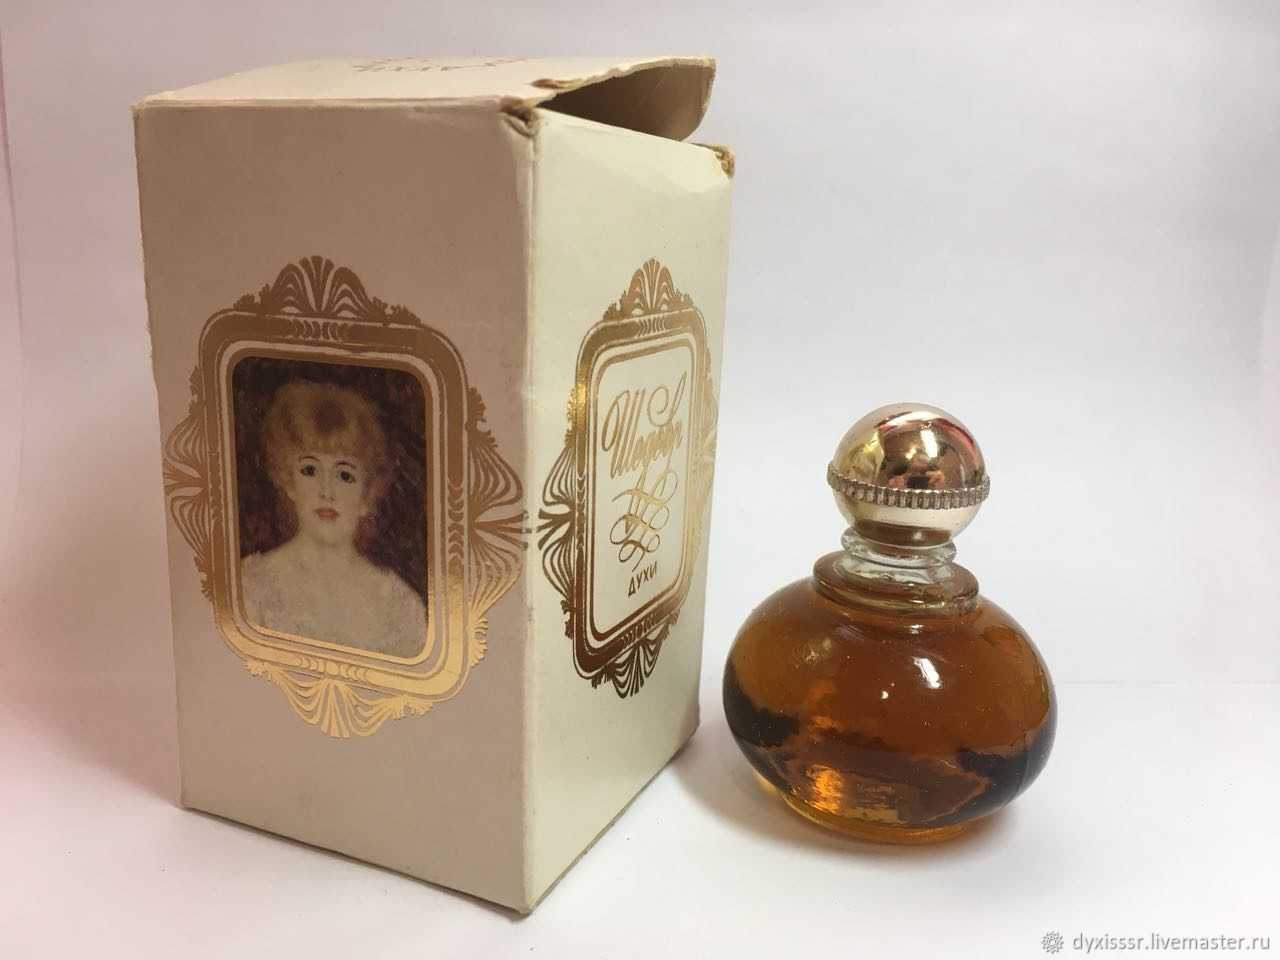 Ретро ароматы: топ 10 самых легендарных парфюмов